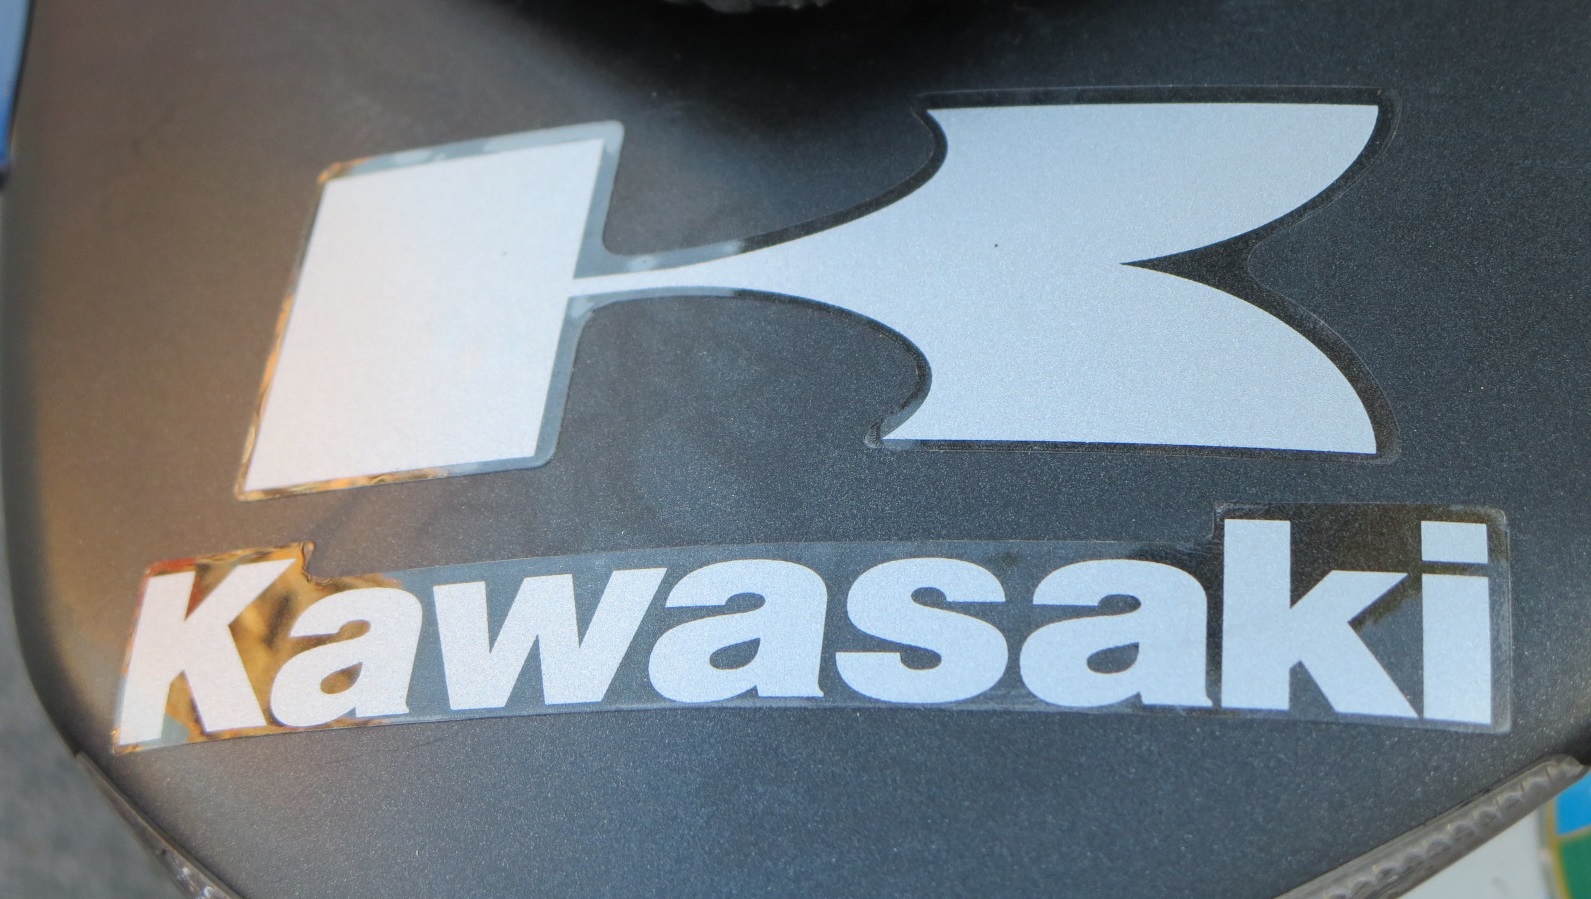 Kawasaki Z750, Kawasaki z 750, Kawasaki ninjia, Kawasaki Z800, Kawasaki Z1000, rizoma, barracuda, akrapovic, termignonii, arrow, supersport, naked